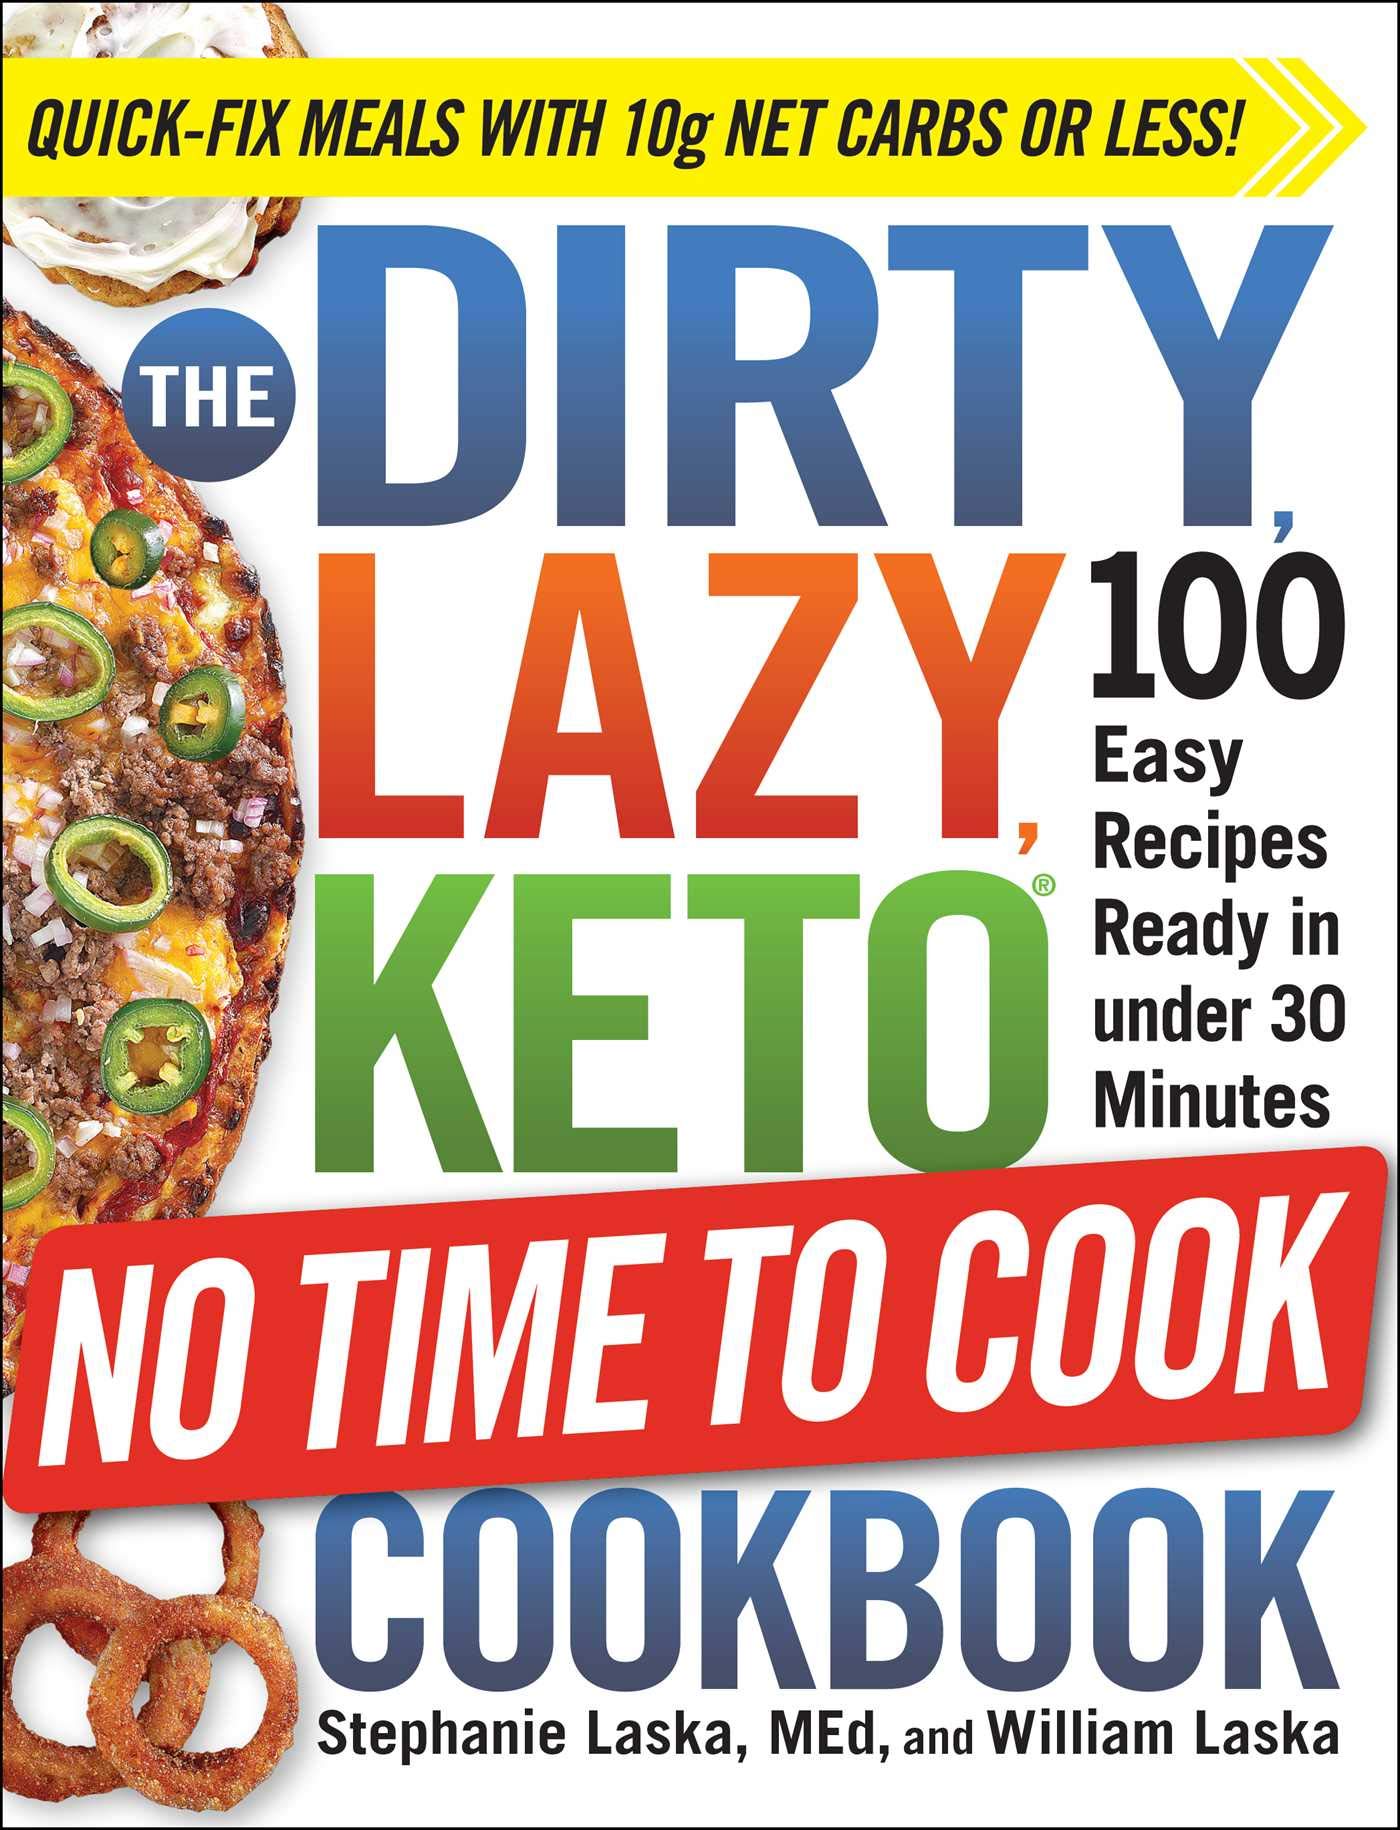 The DIRTY, LAZY, KETO No Time to Cook Cookbook | Stephanie Laska, William Laska image0